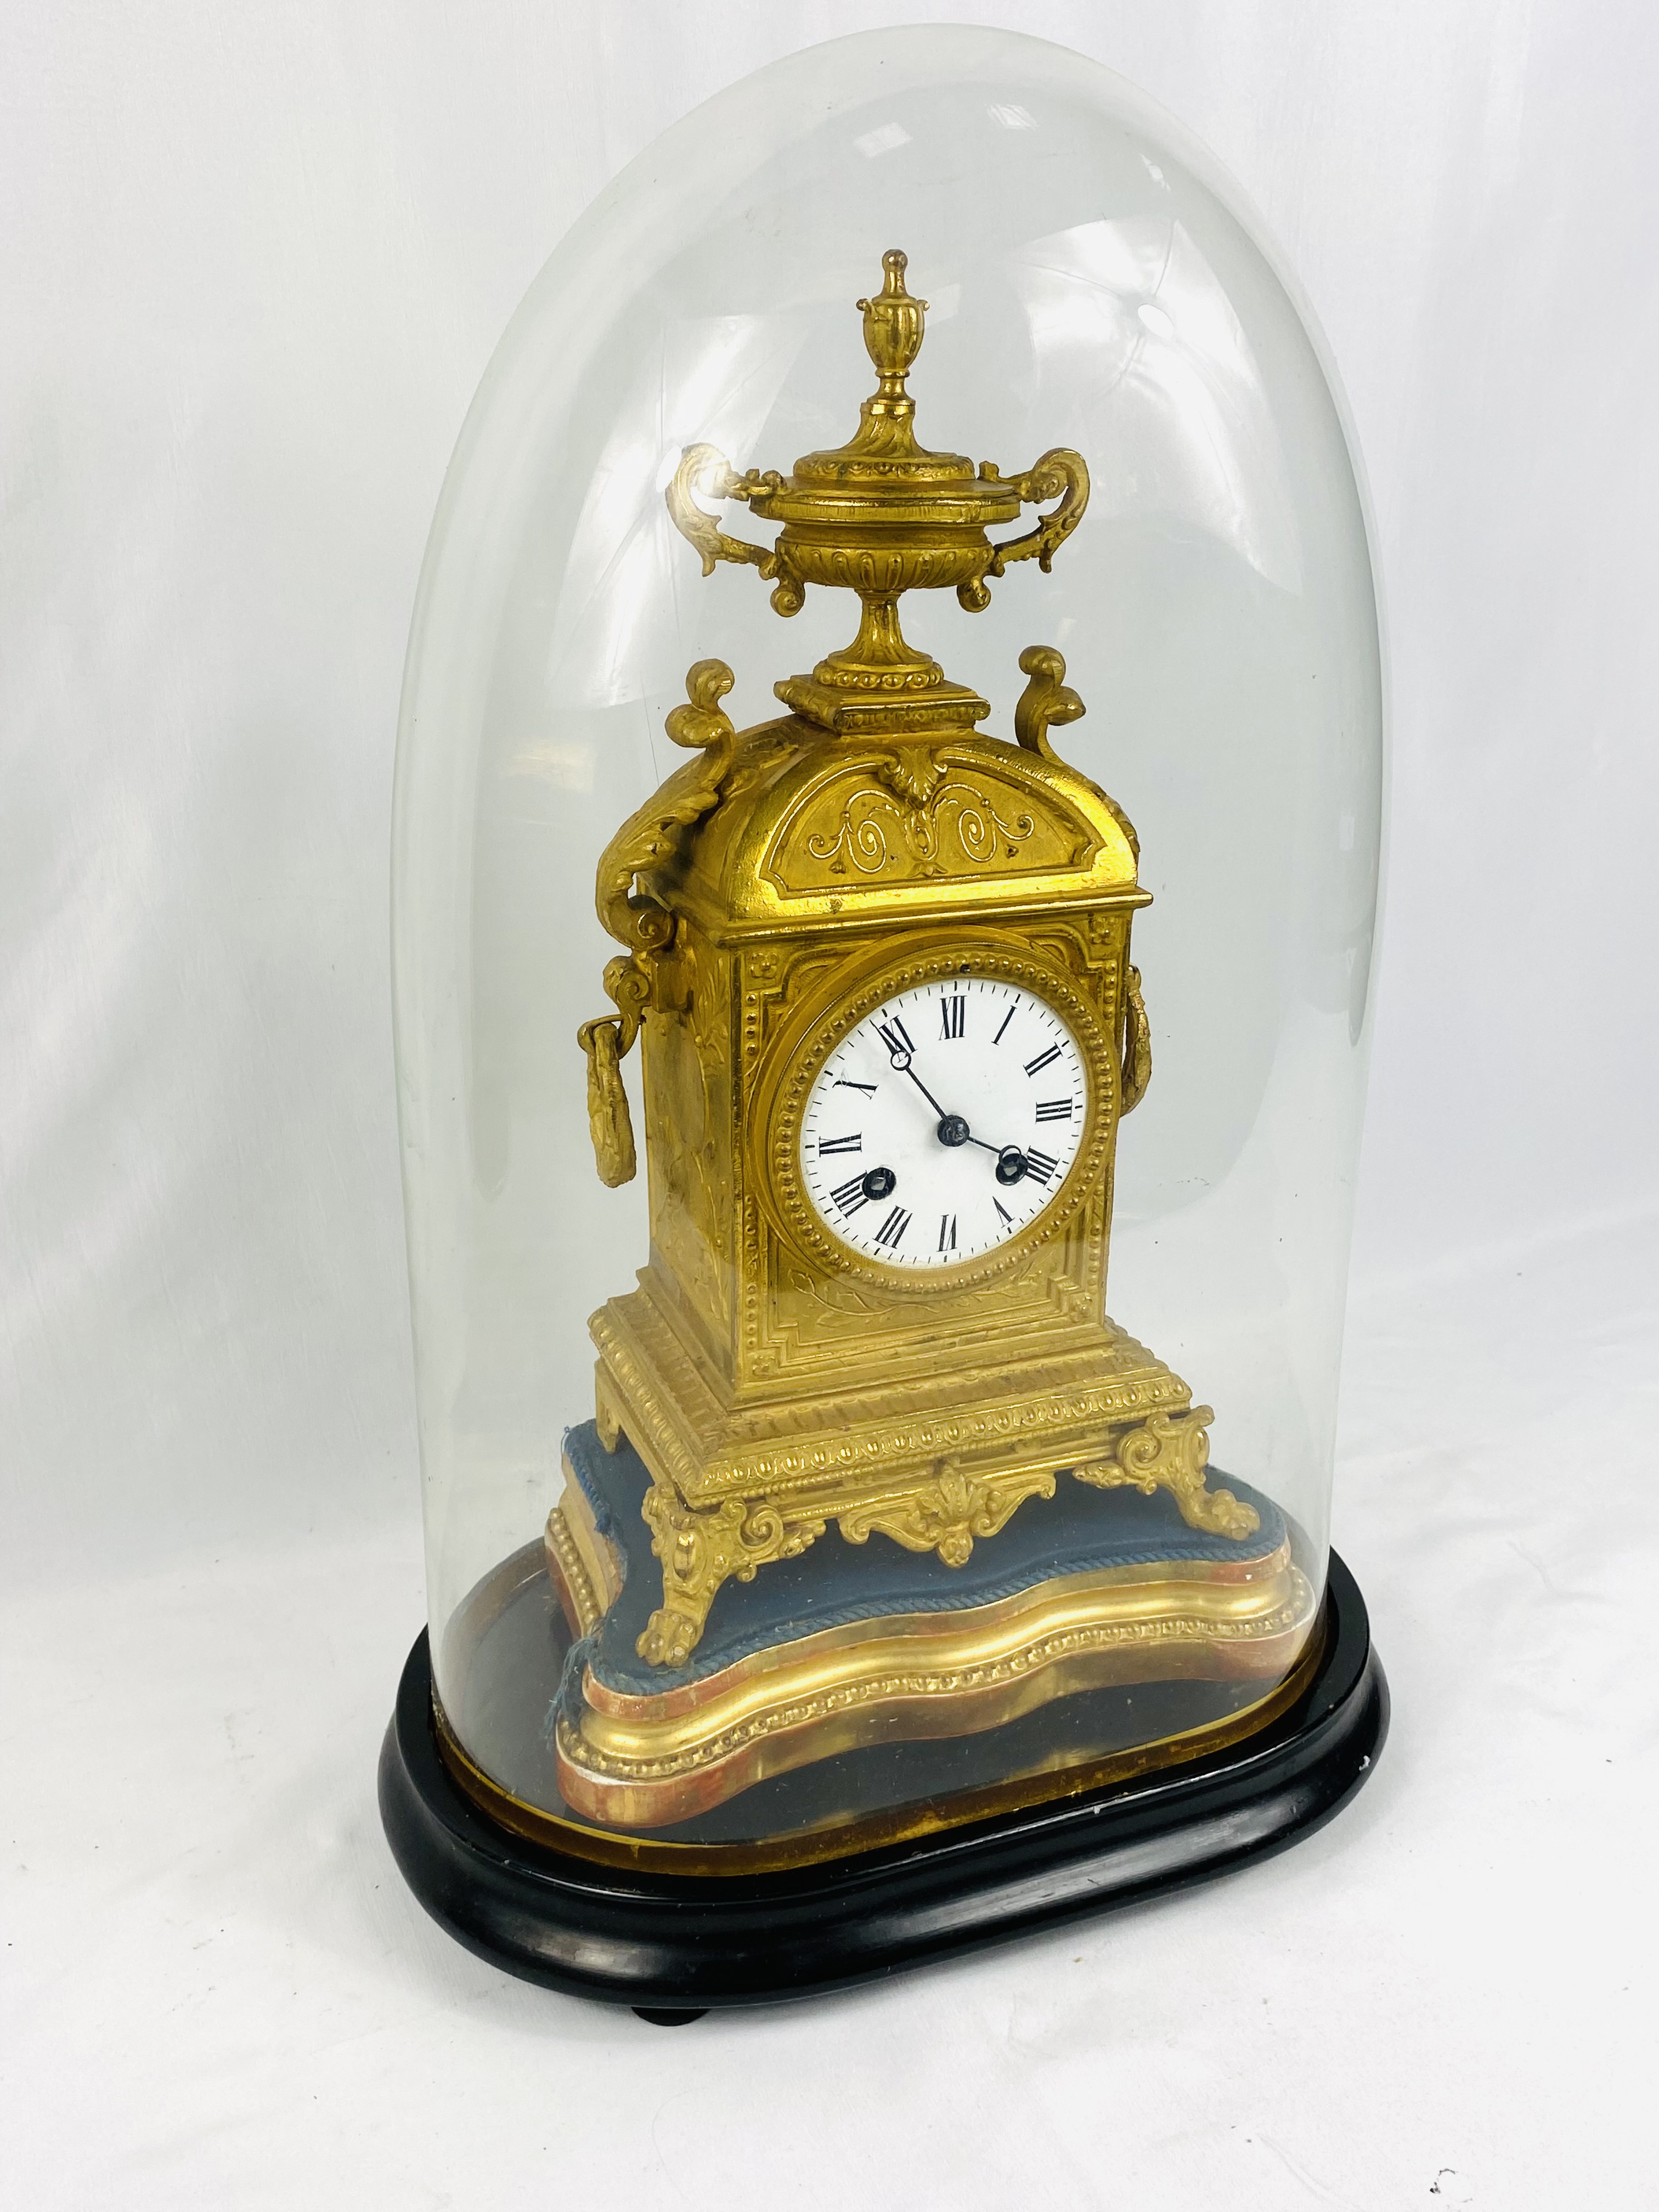 French ormolu and enamel mantel clock - Image 2 of 6